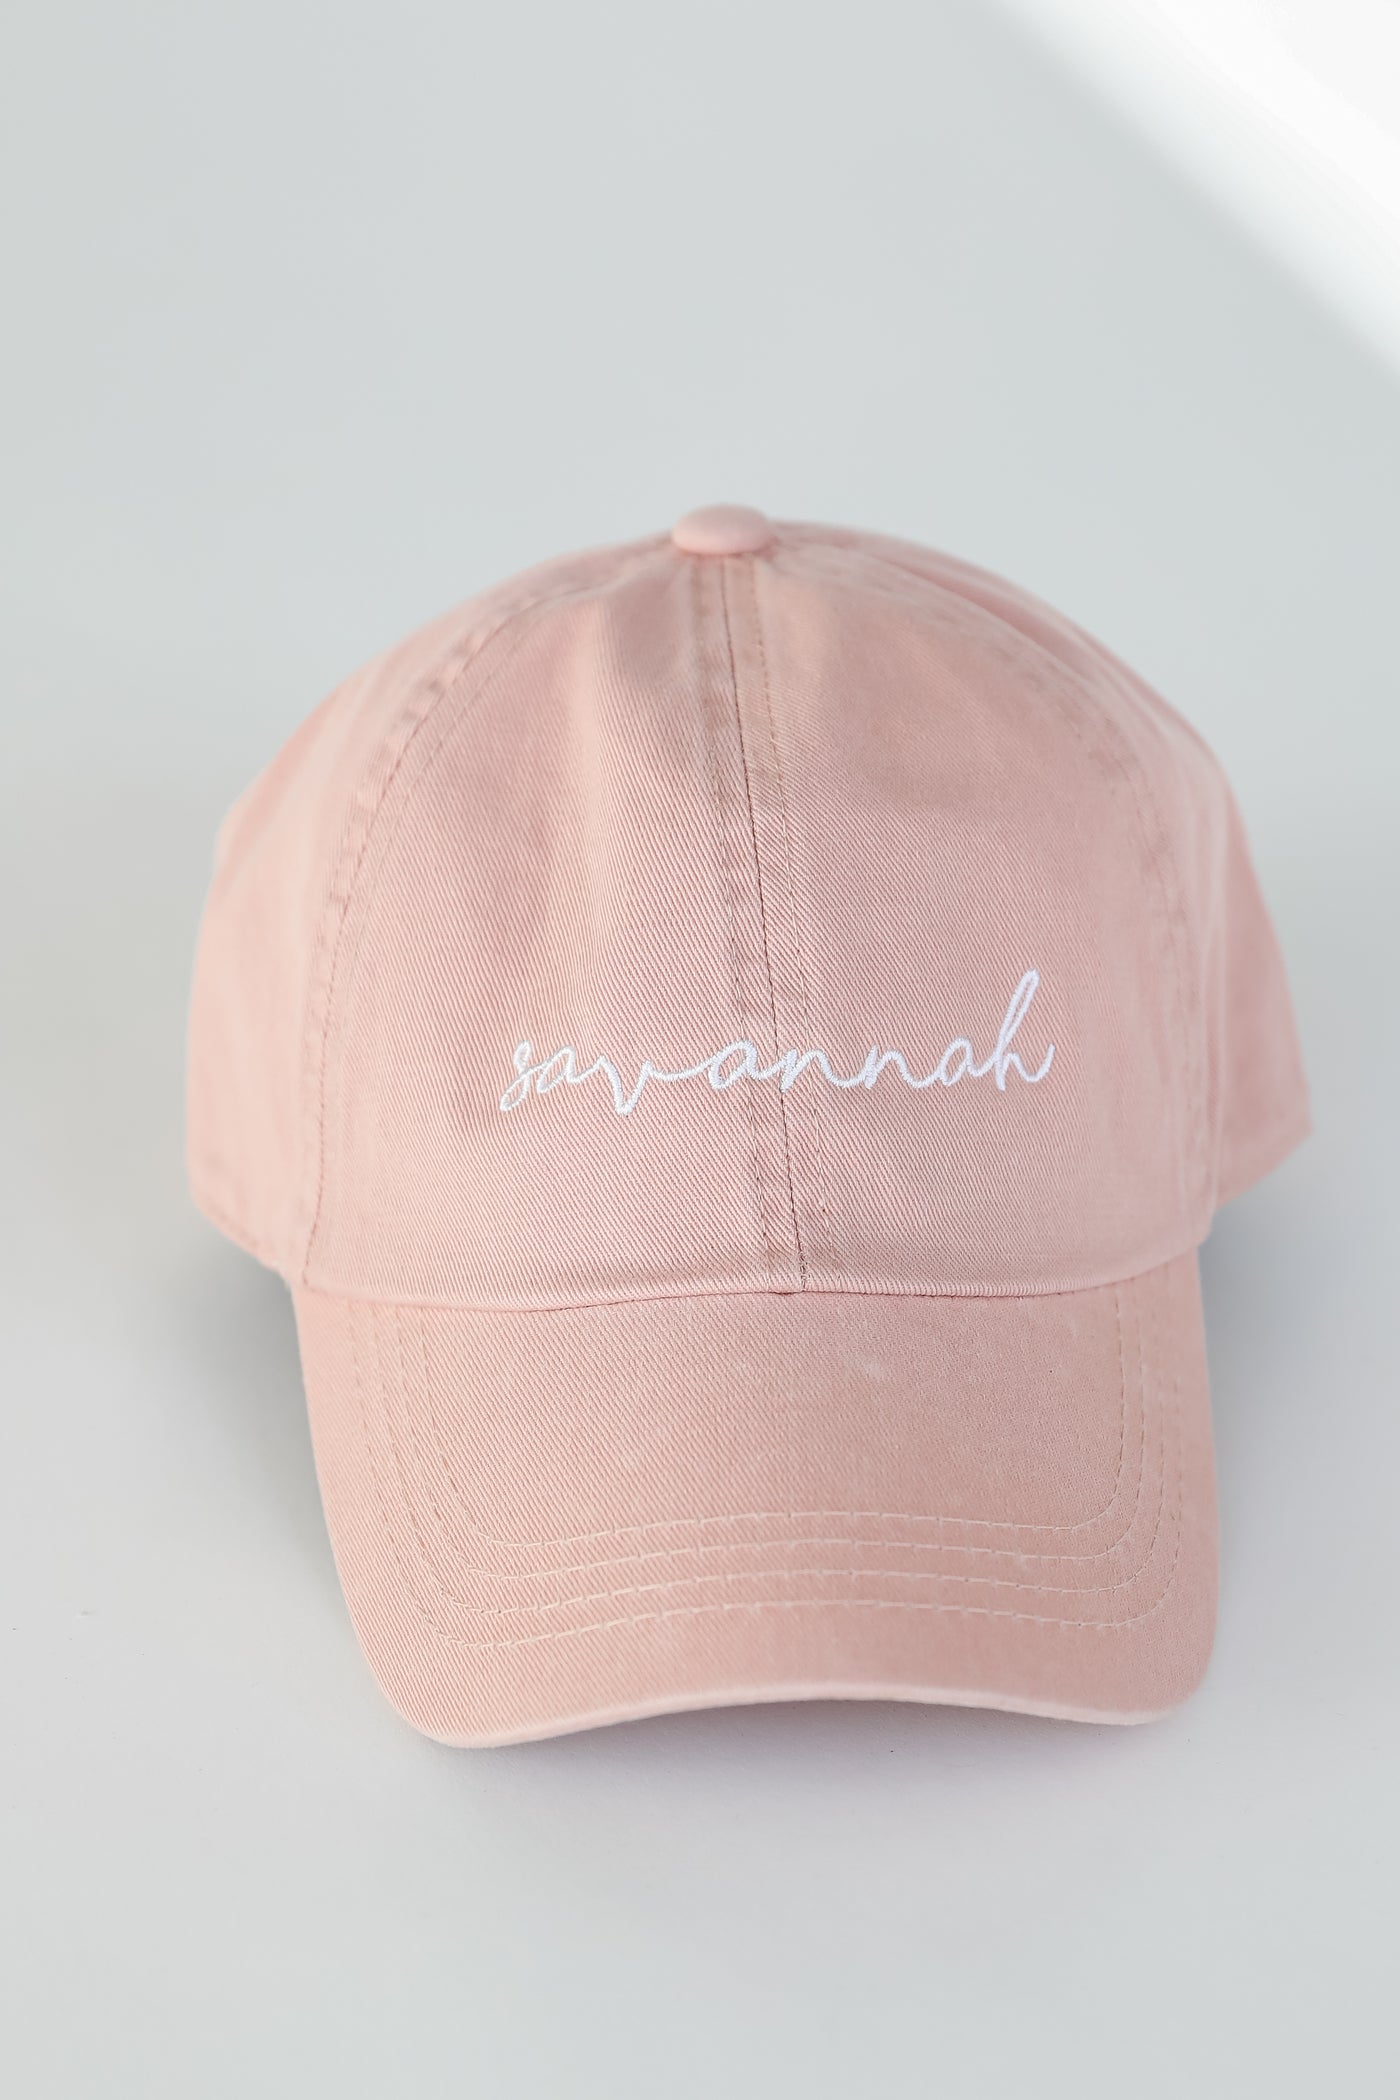 Savannah Script Embroidered Hat in blush